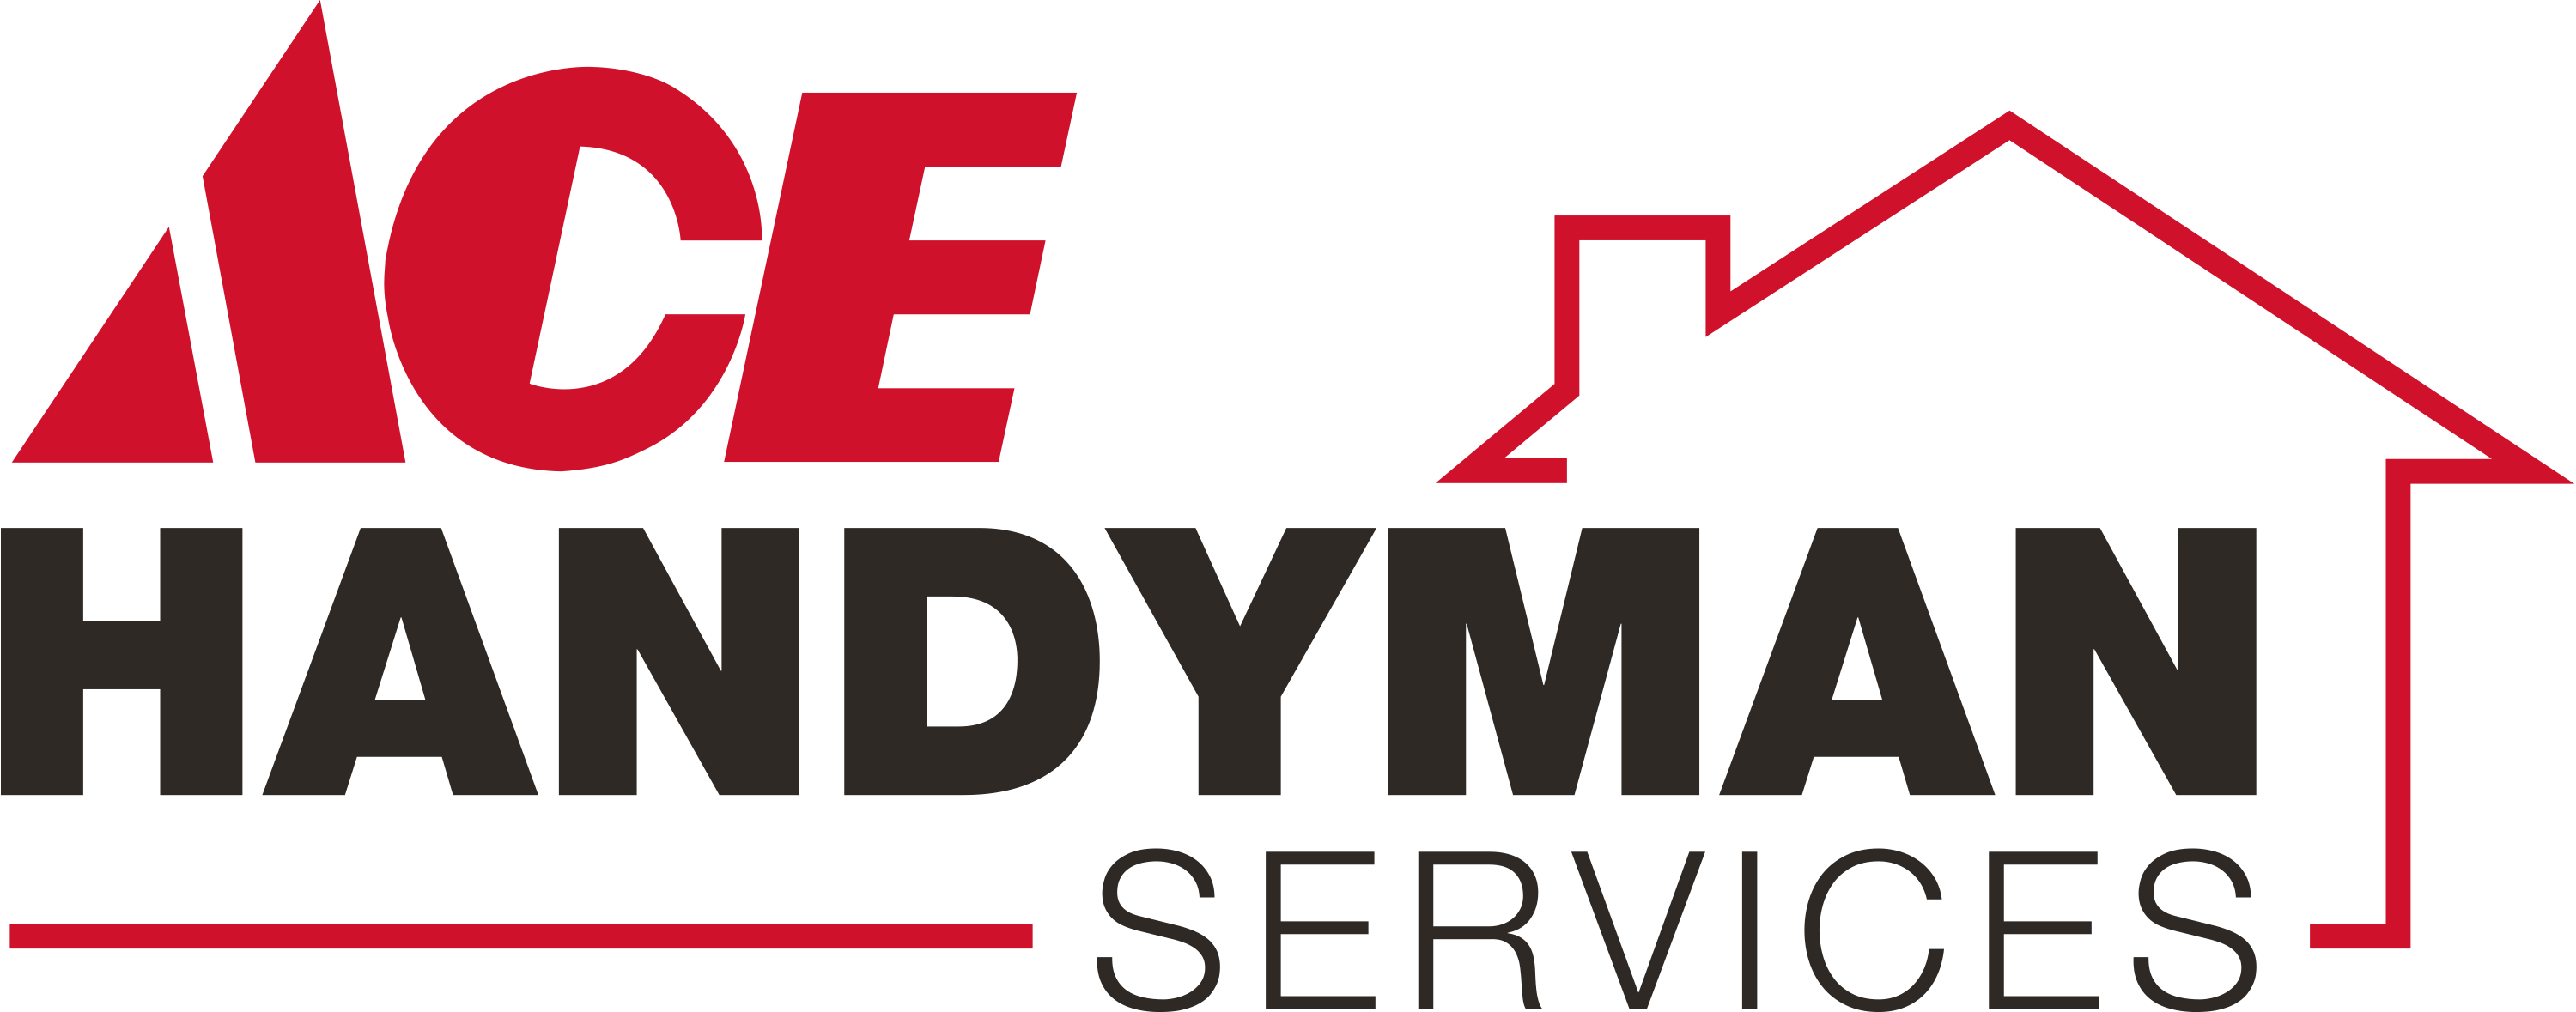 Ace Handyman Services Pearland Logo